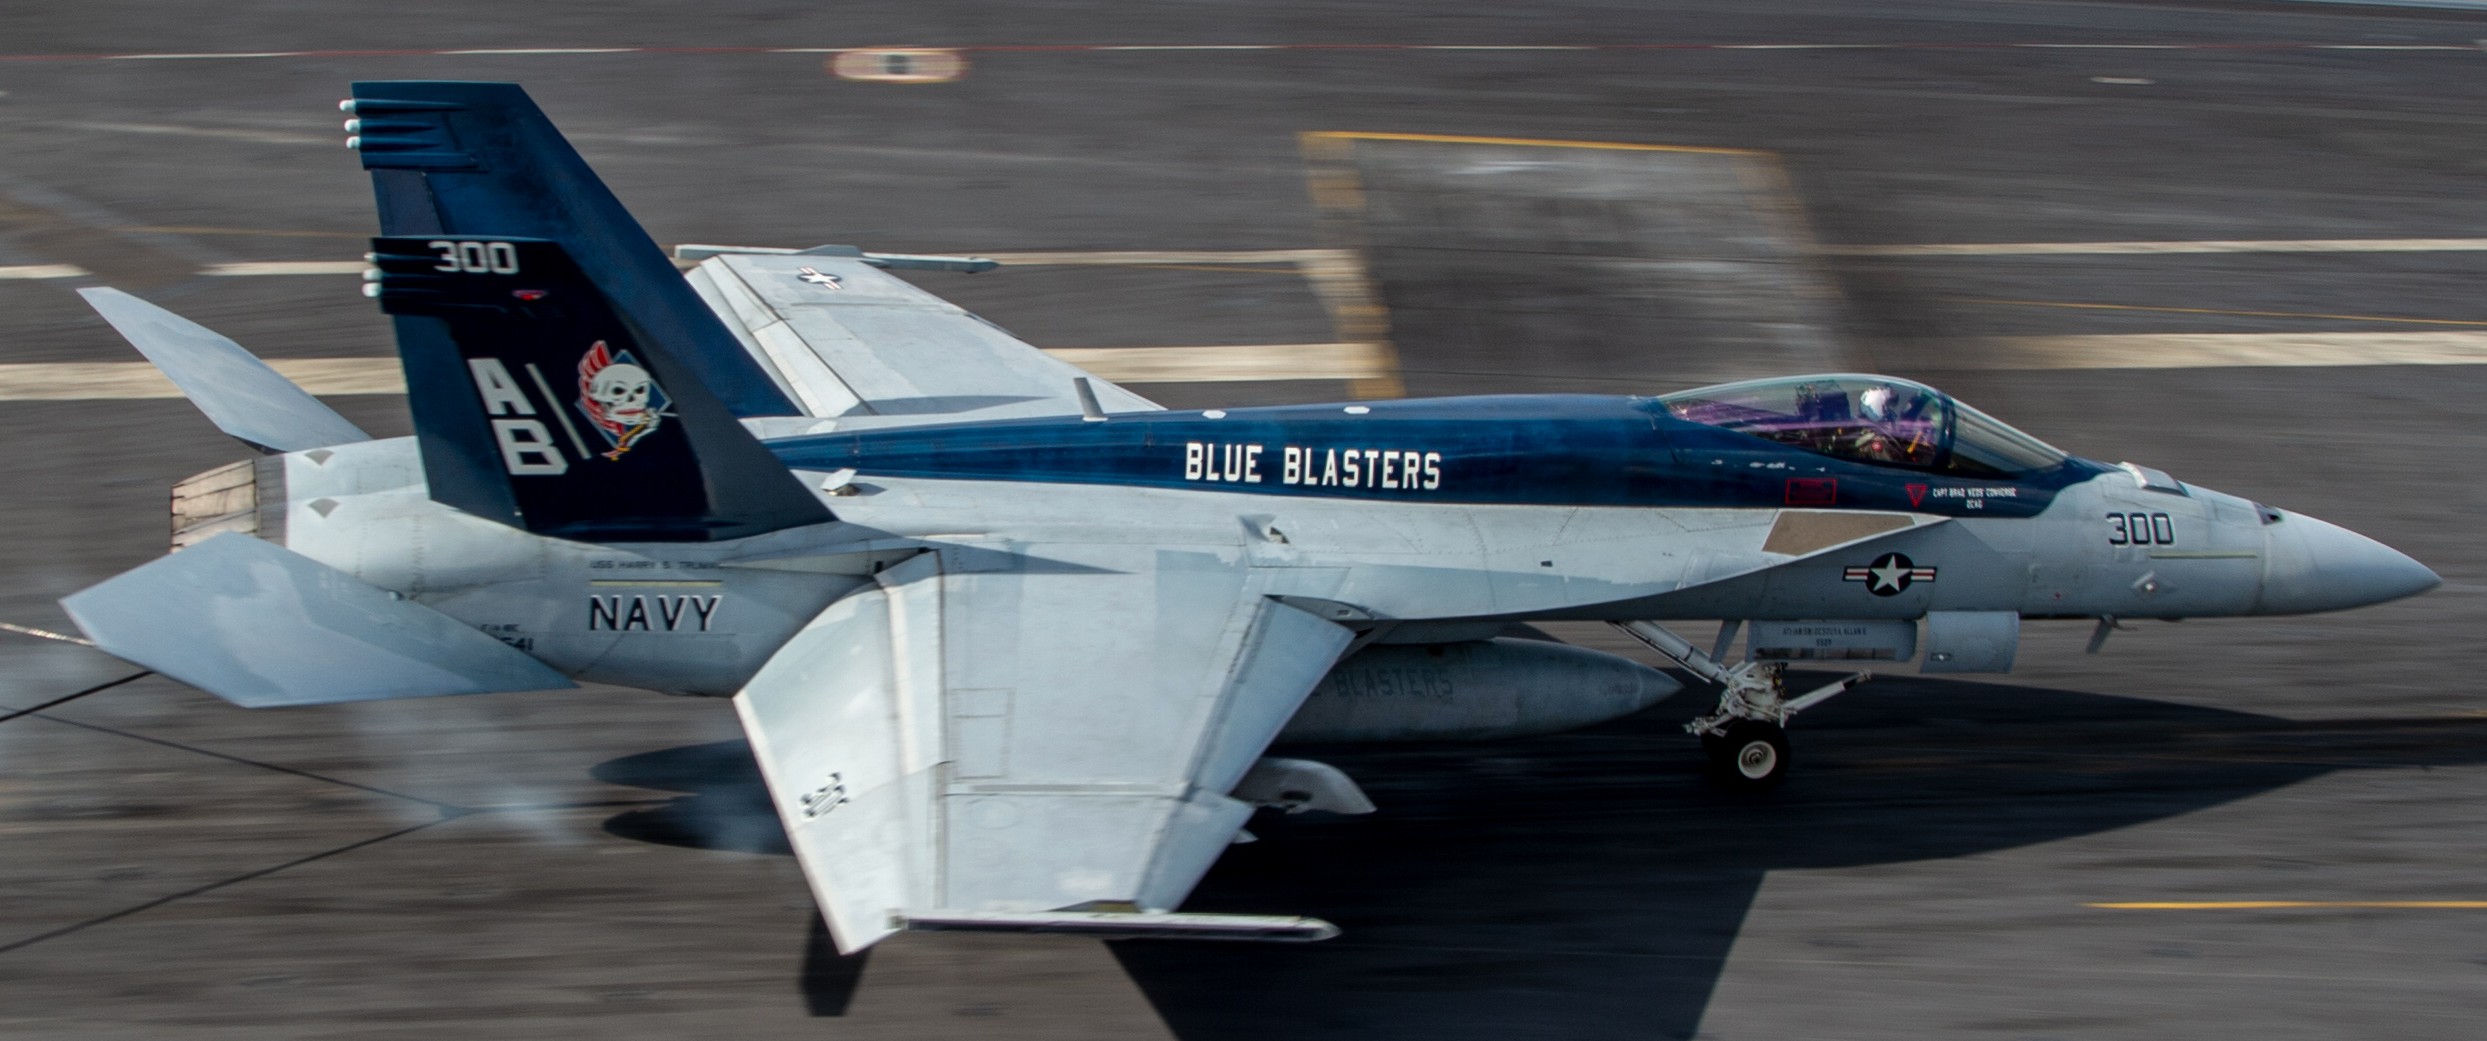 vfa-34 blue blasters strike fighter squadron f/a-18e super hornet cvn-75 uss harry s. truman cvw-8 us navy 89